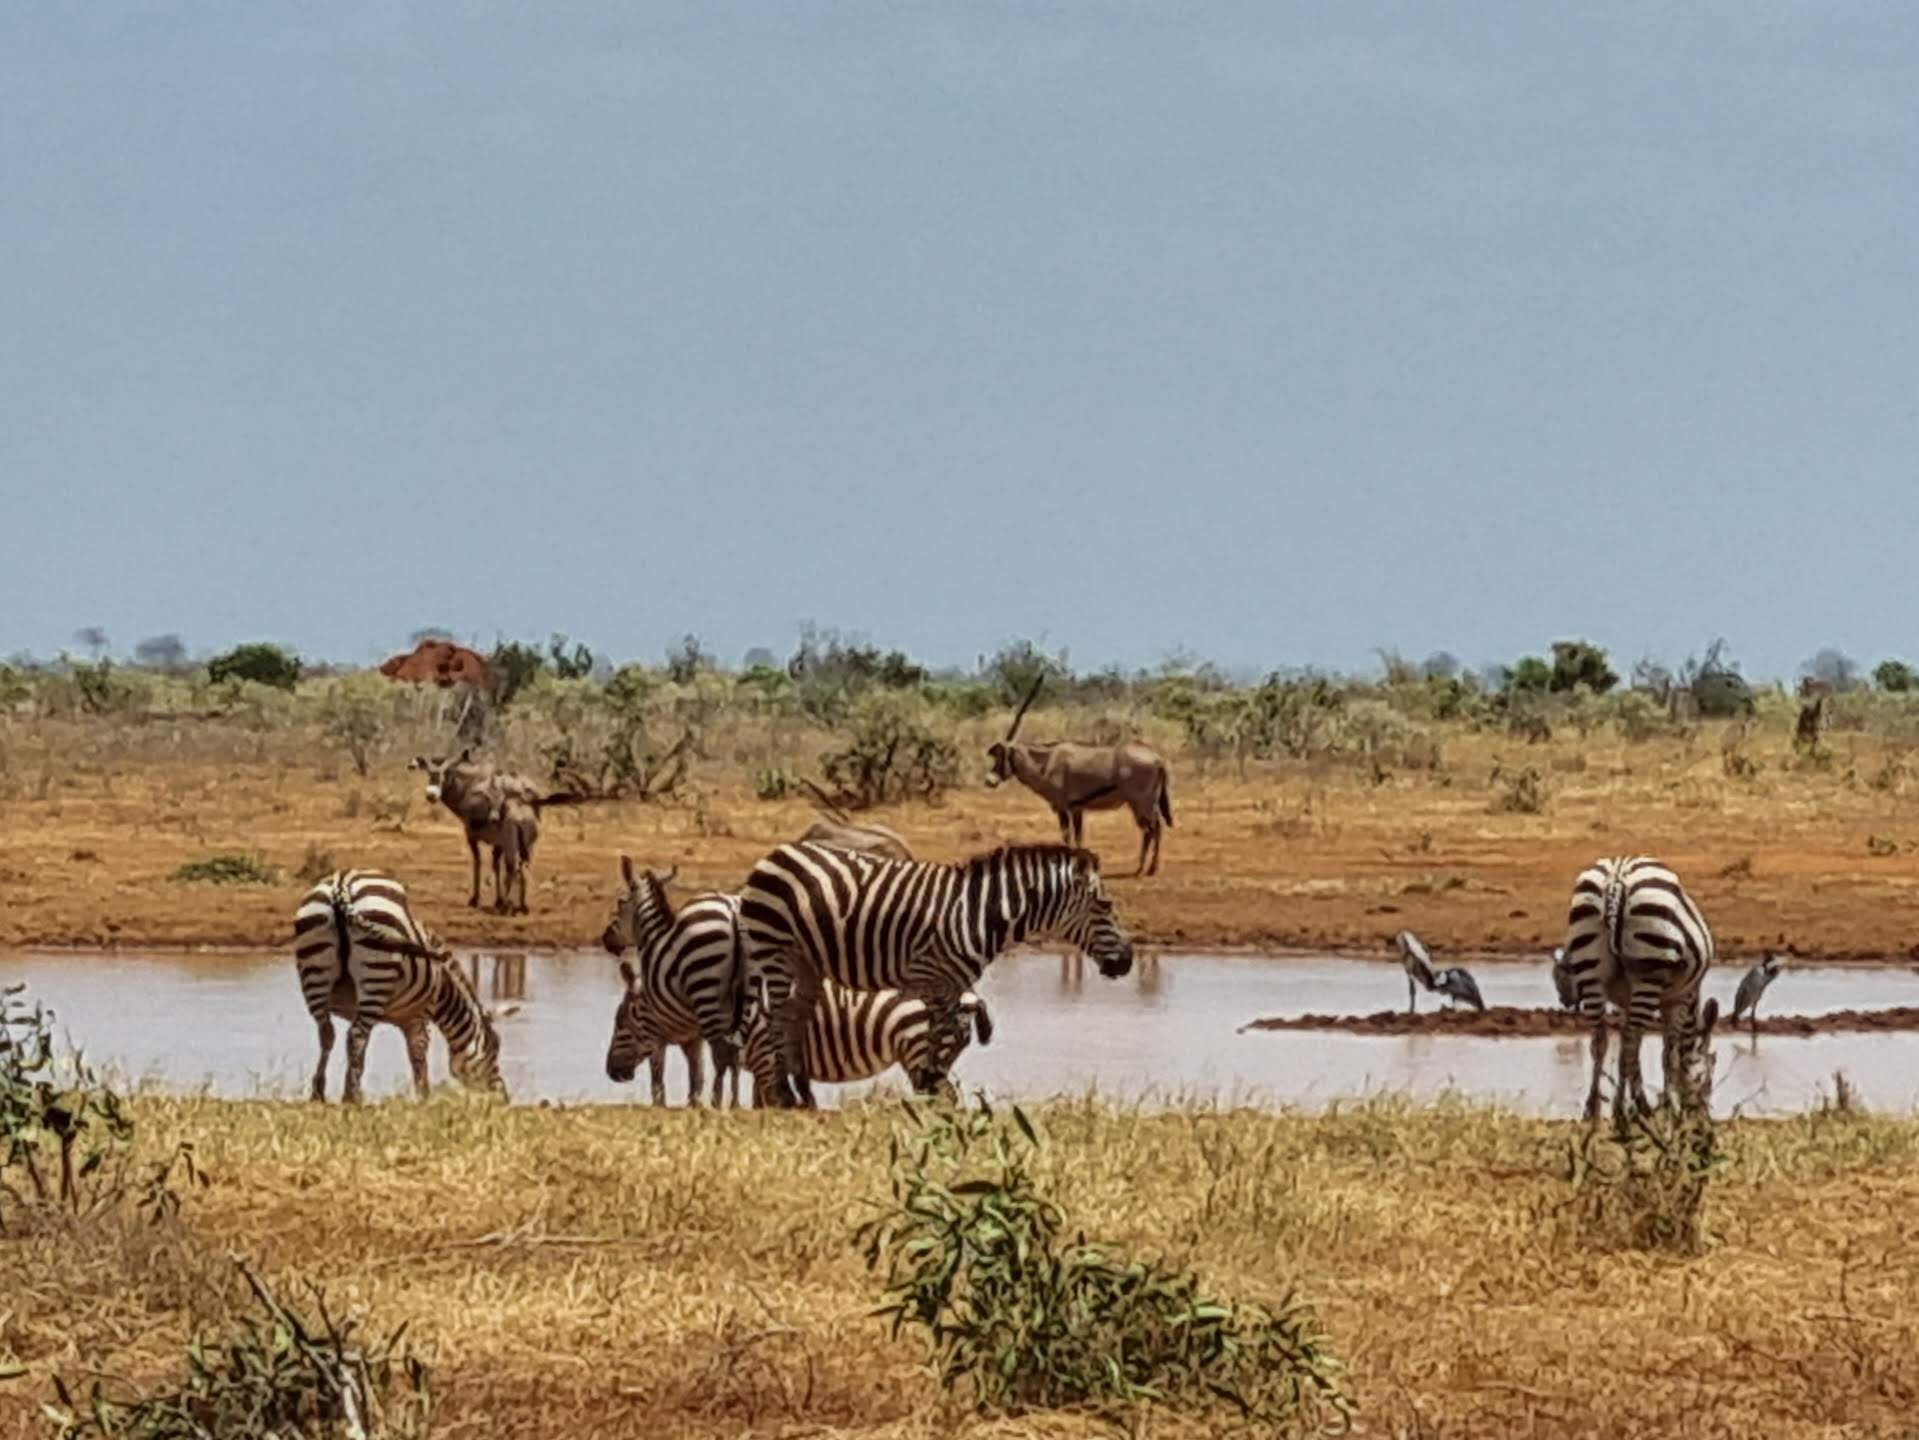 Tsavo East National Park, Kenya